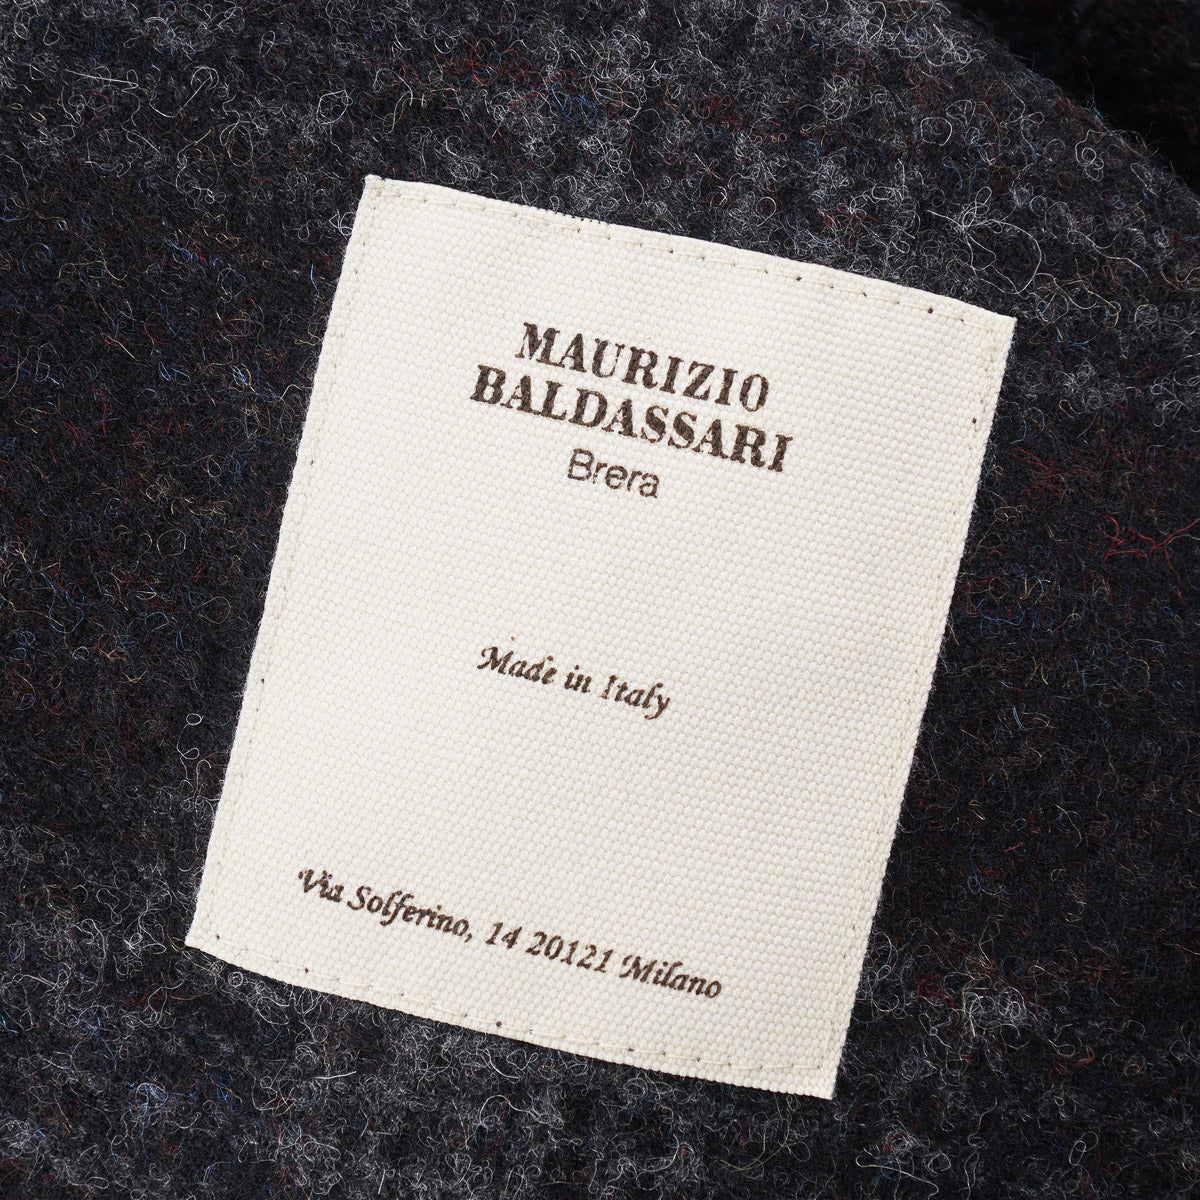 Maurizio Baldassari Baby Alpaca Overshirt - Top Shelf Apparel